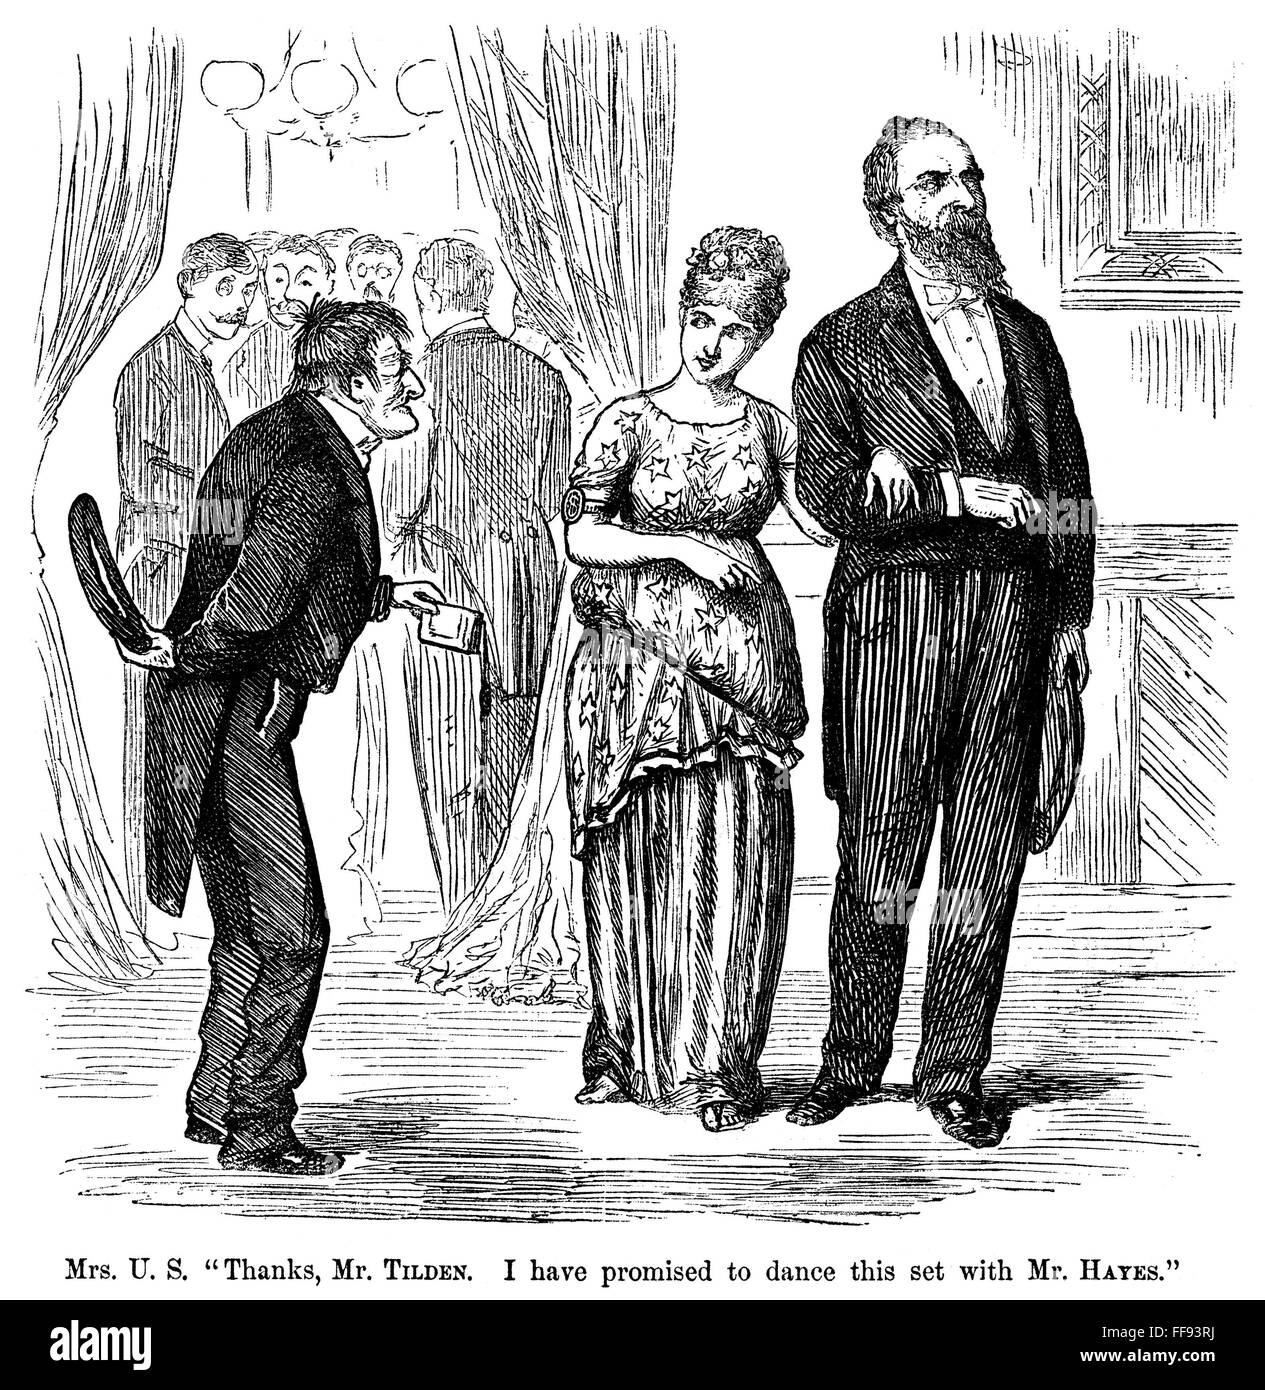 N dank livejournal. Компромисс 1877 г карикатуры. Писец Бартлби иллюстрации. The American 1877.